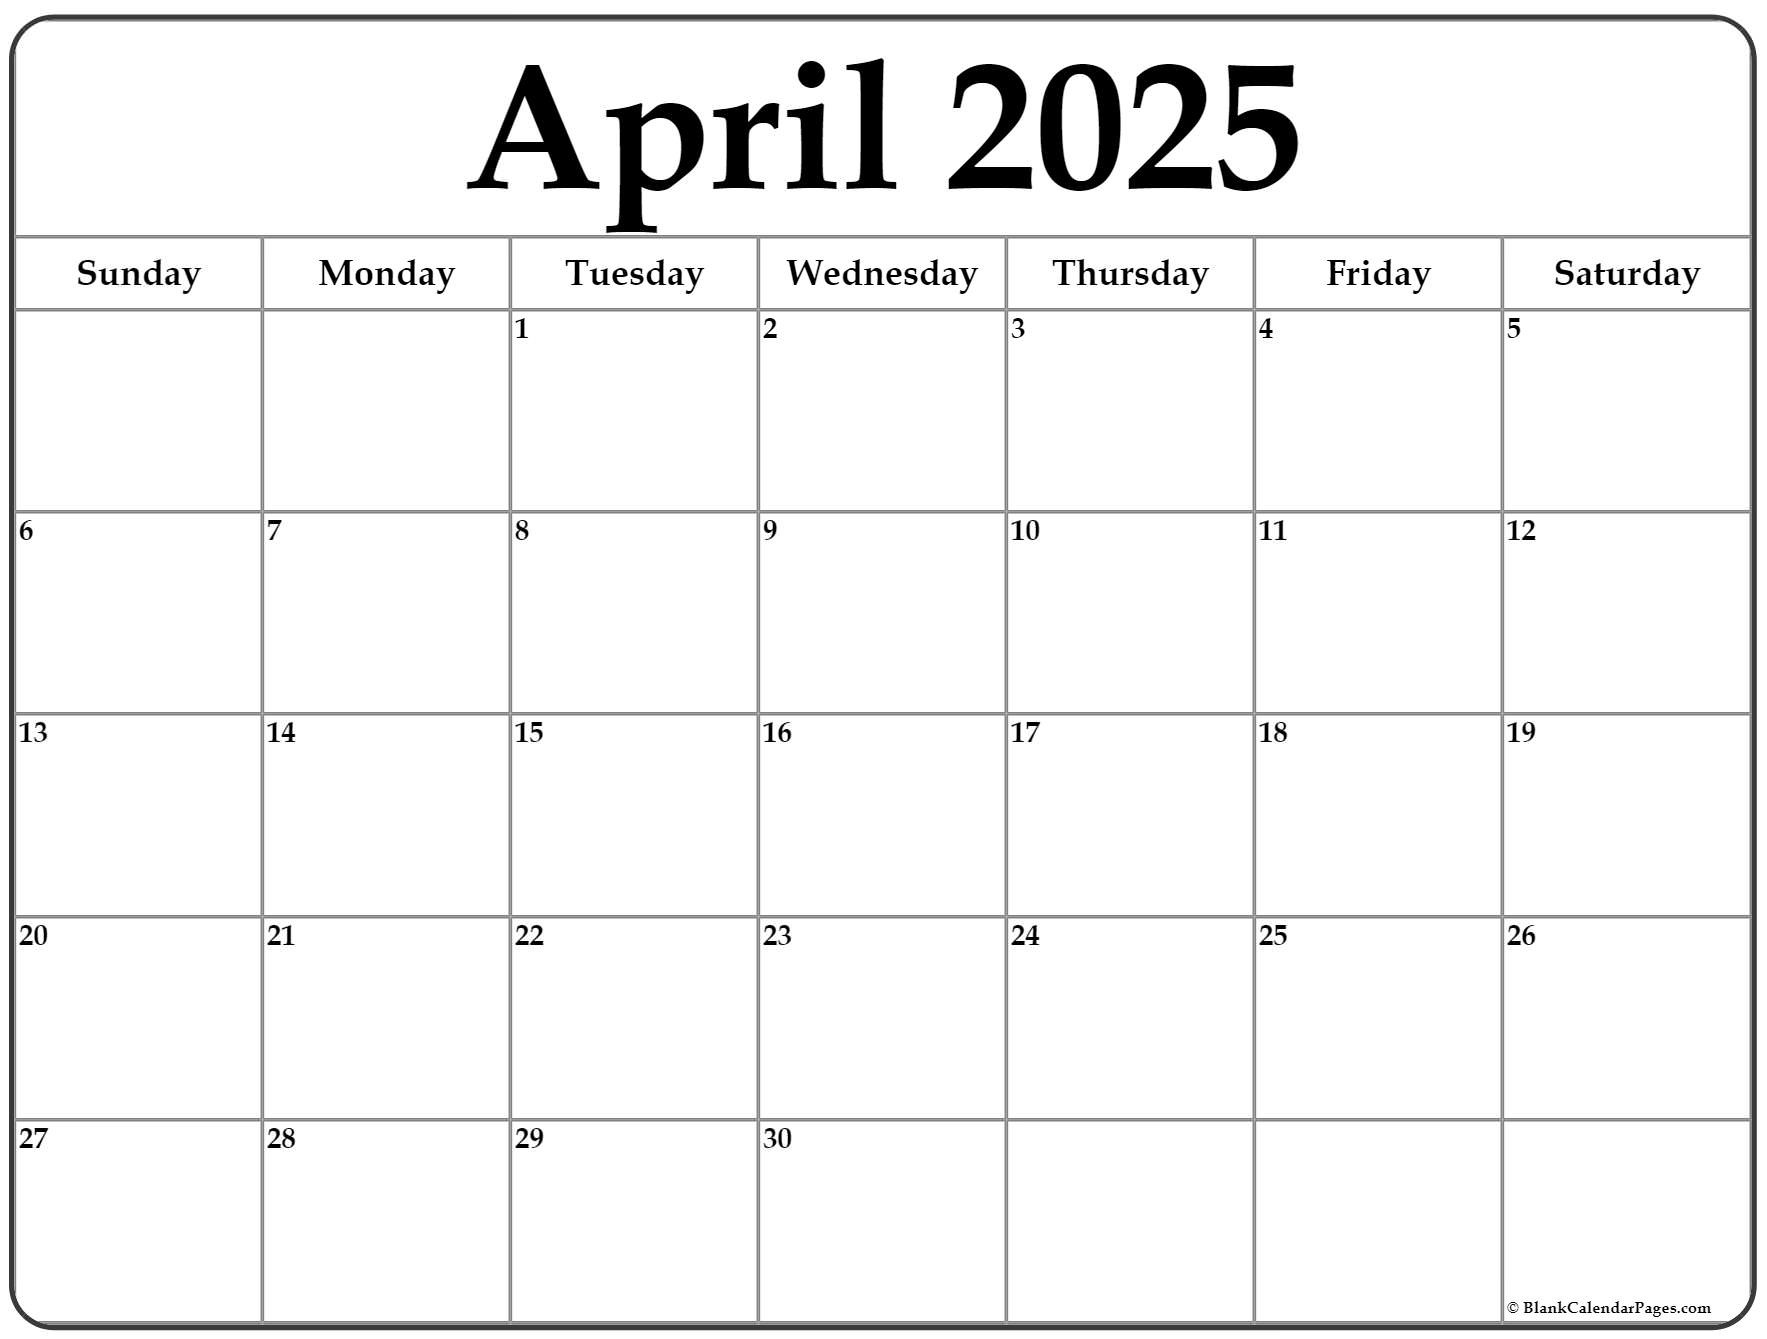 april-2025-calendar-free-printable-calendar